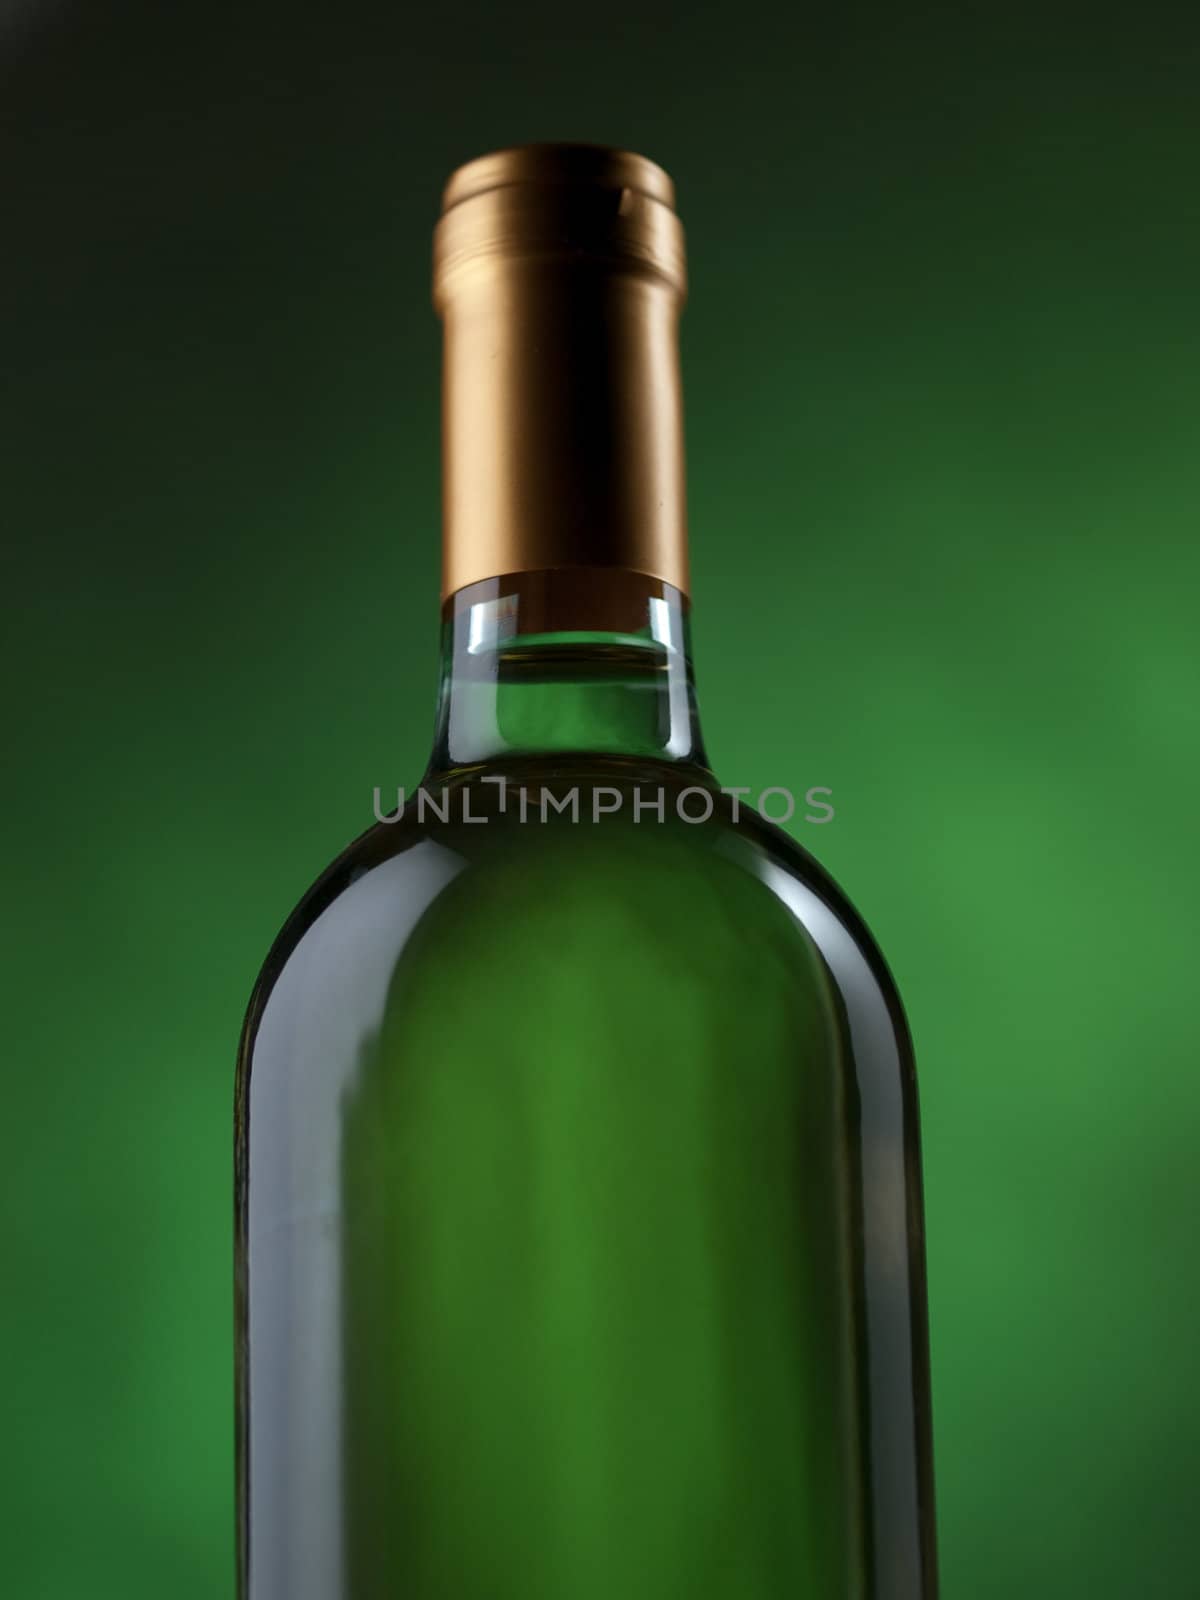 Bottle of white wine on green background